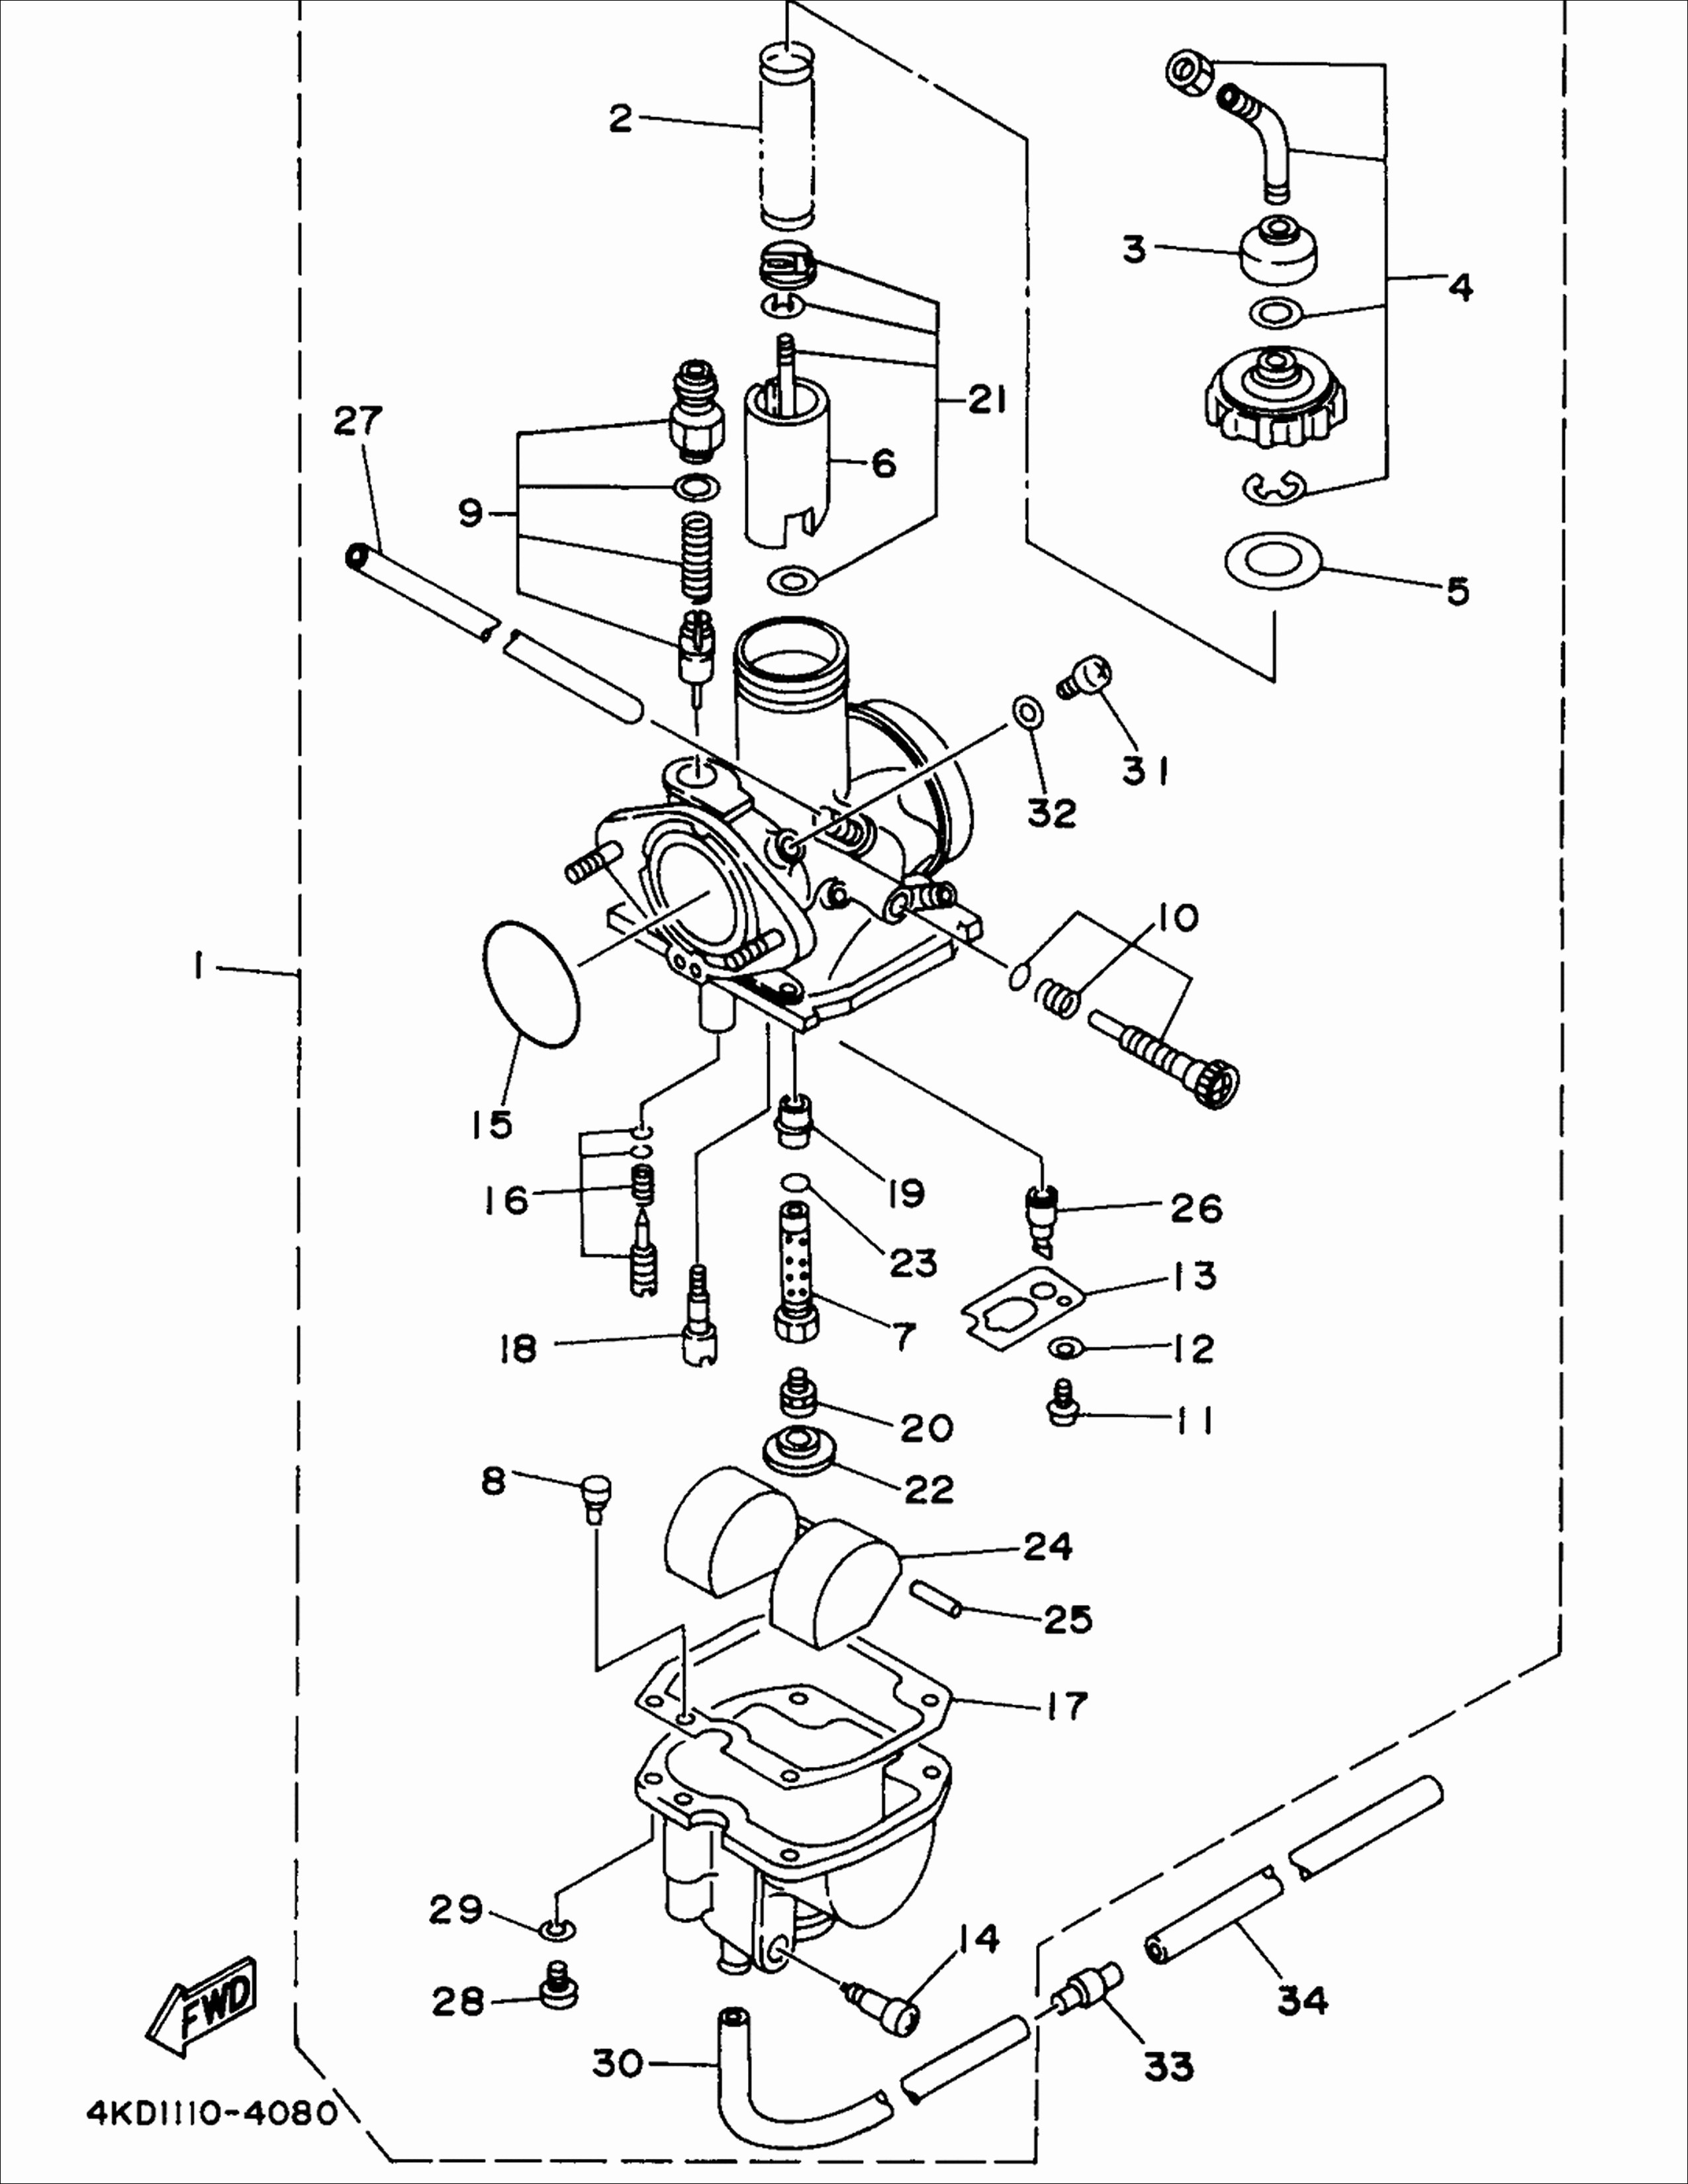 Toyota Previa Engine Diagram 1992 Pontiac Grand Am Engine Diagram Wiring Schematic Worksheet Of Toyota Previa Engine Diagram